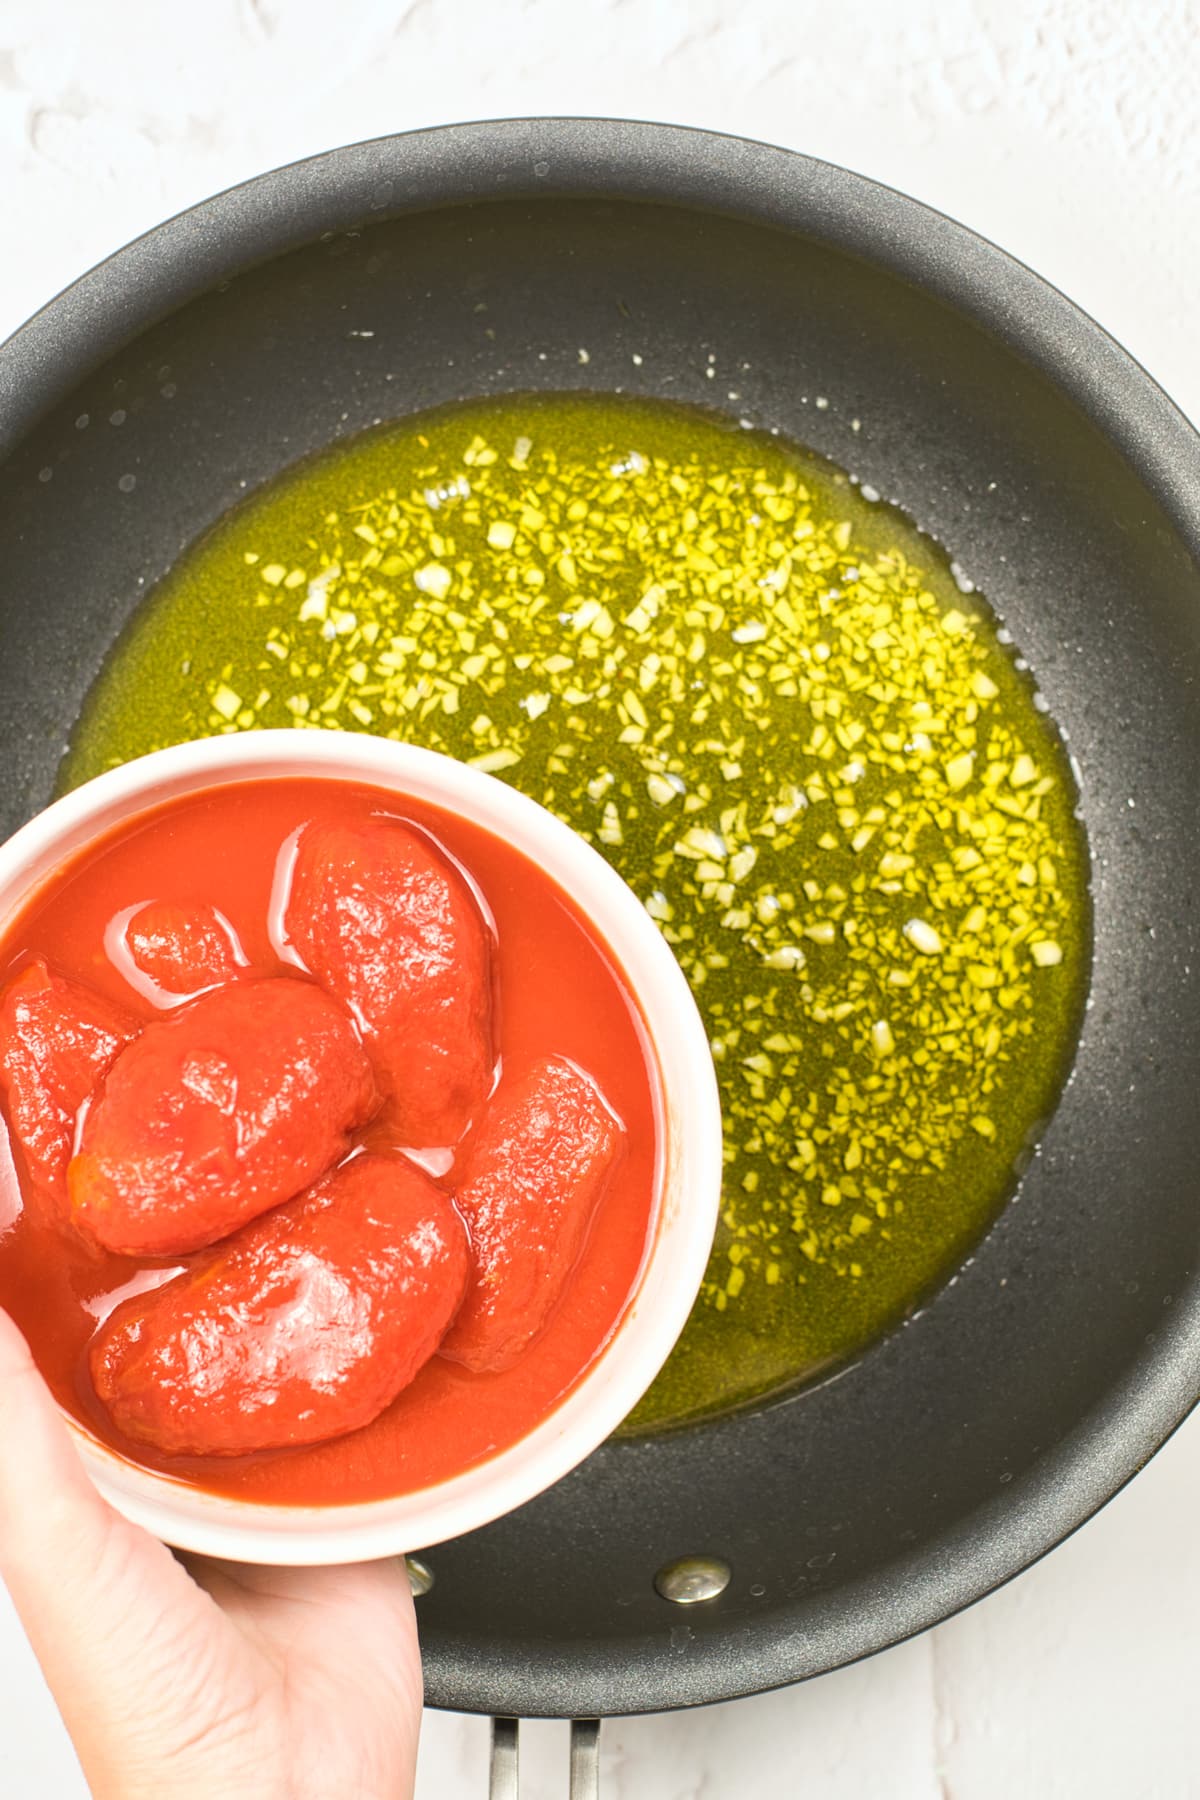 Process of preparing Italian Marinara Sauce Recipe is to add the tomato paste to the garlic